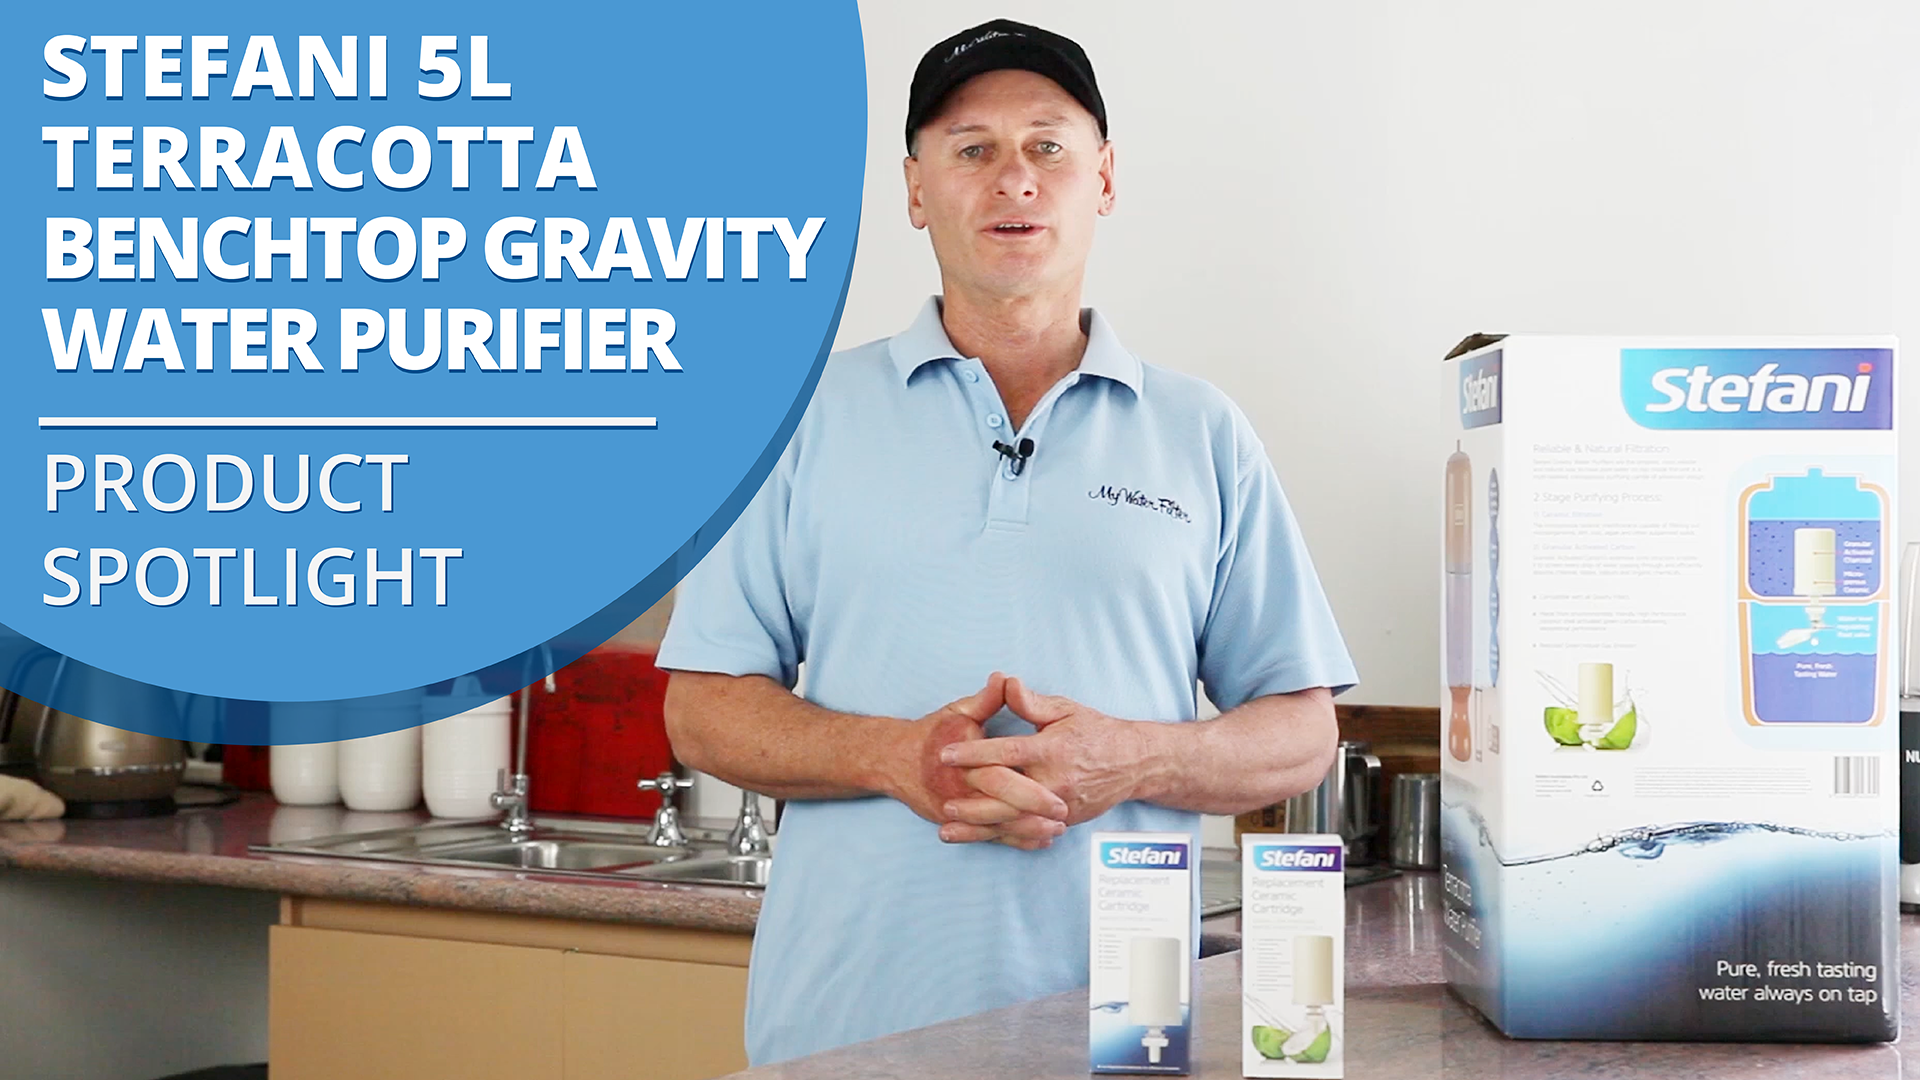 [VIDEO] Stefani 5L Terracotta Benchtop Gravity Water Purifier - Product Spotlight